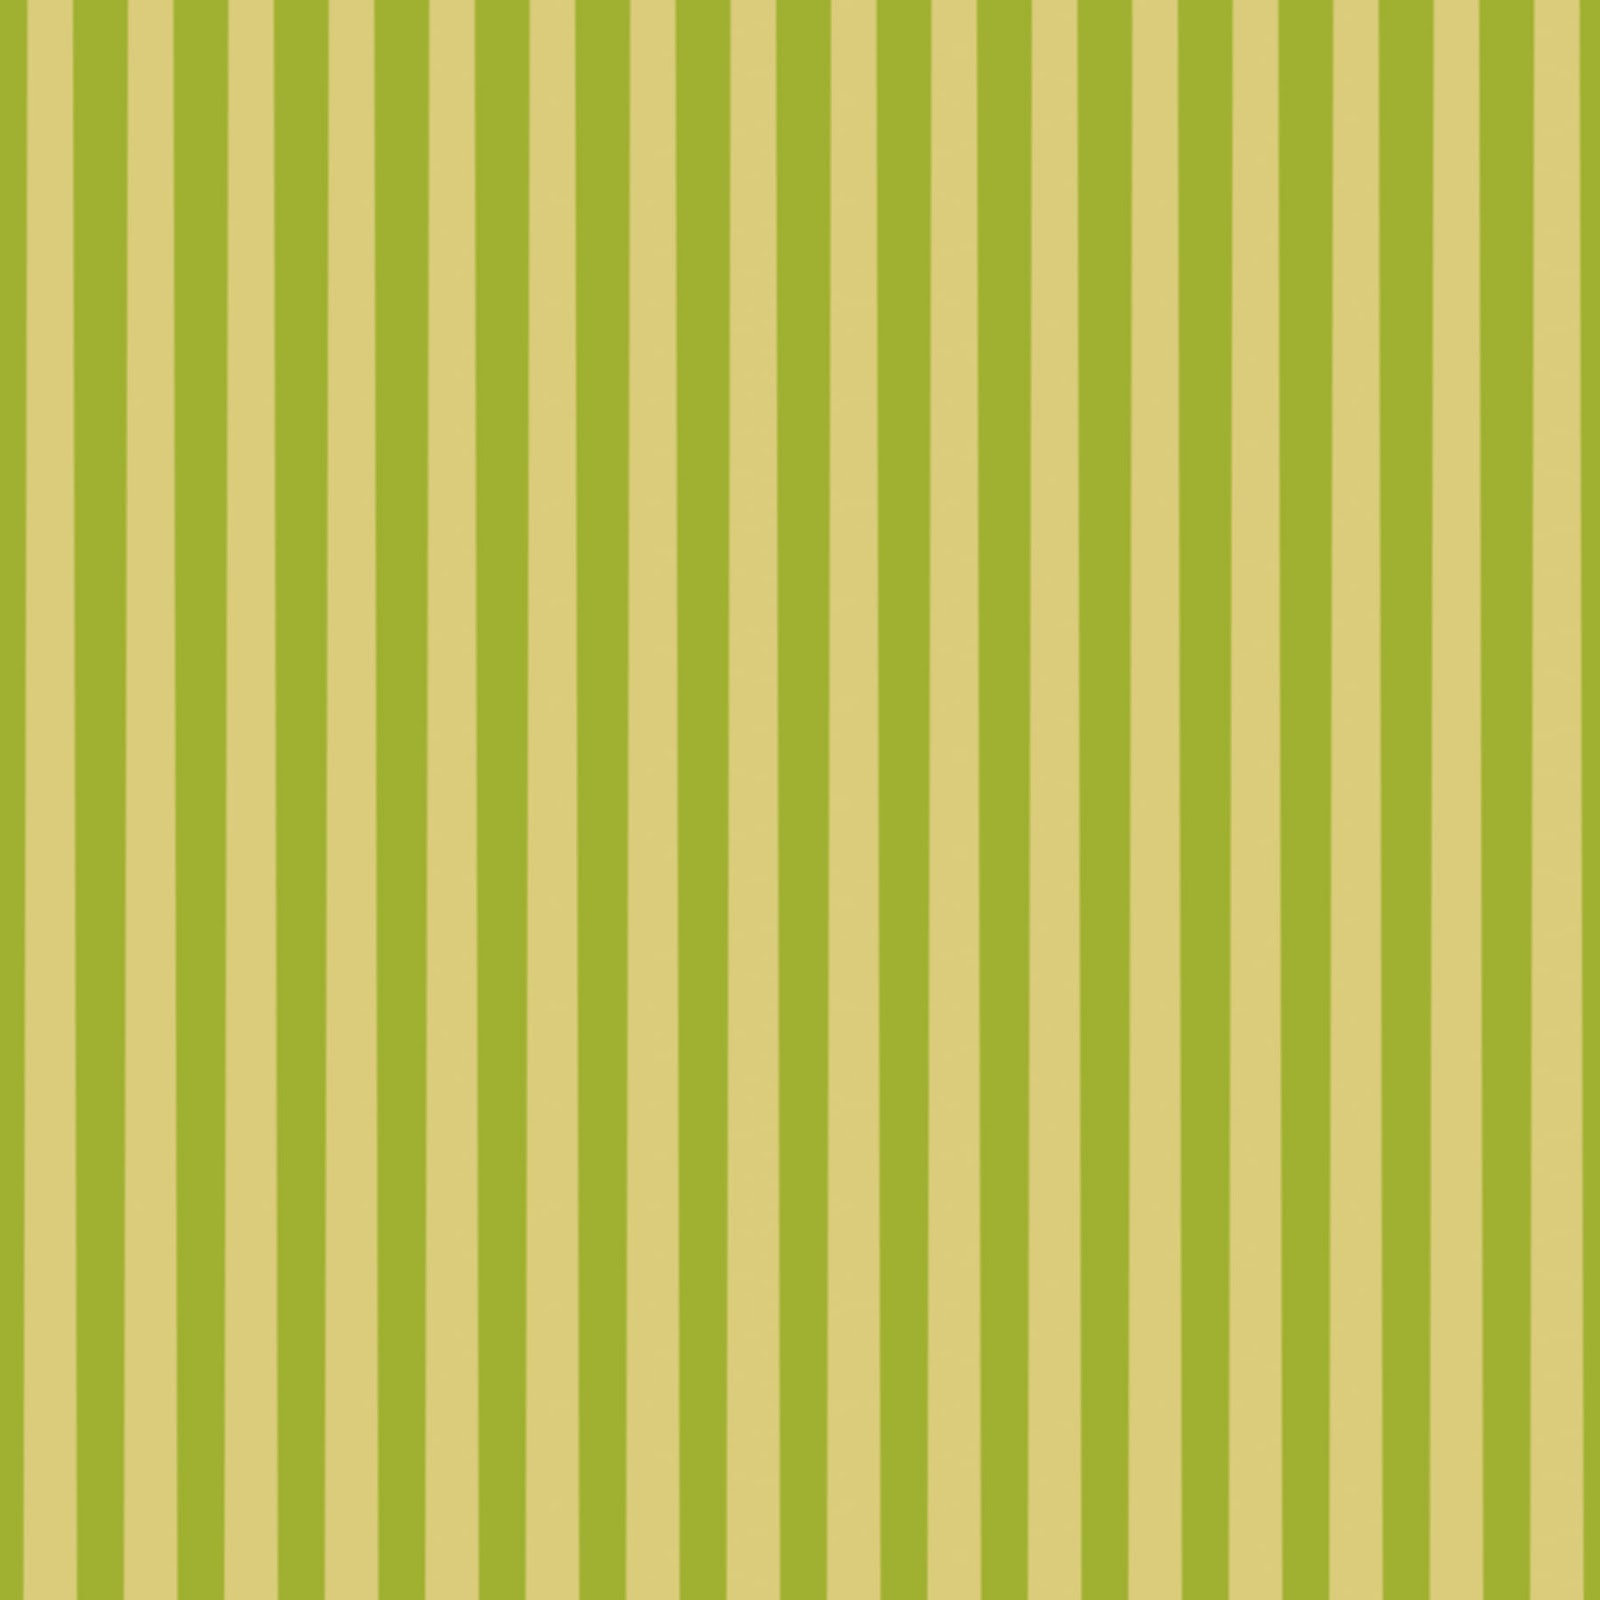 Green striped wallpaper background